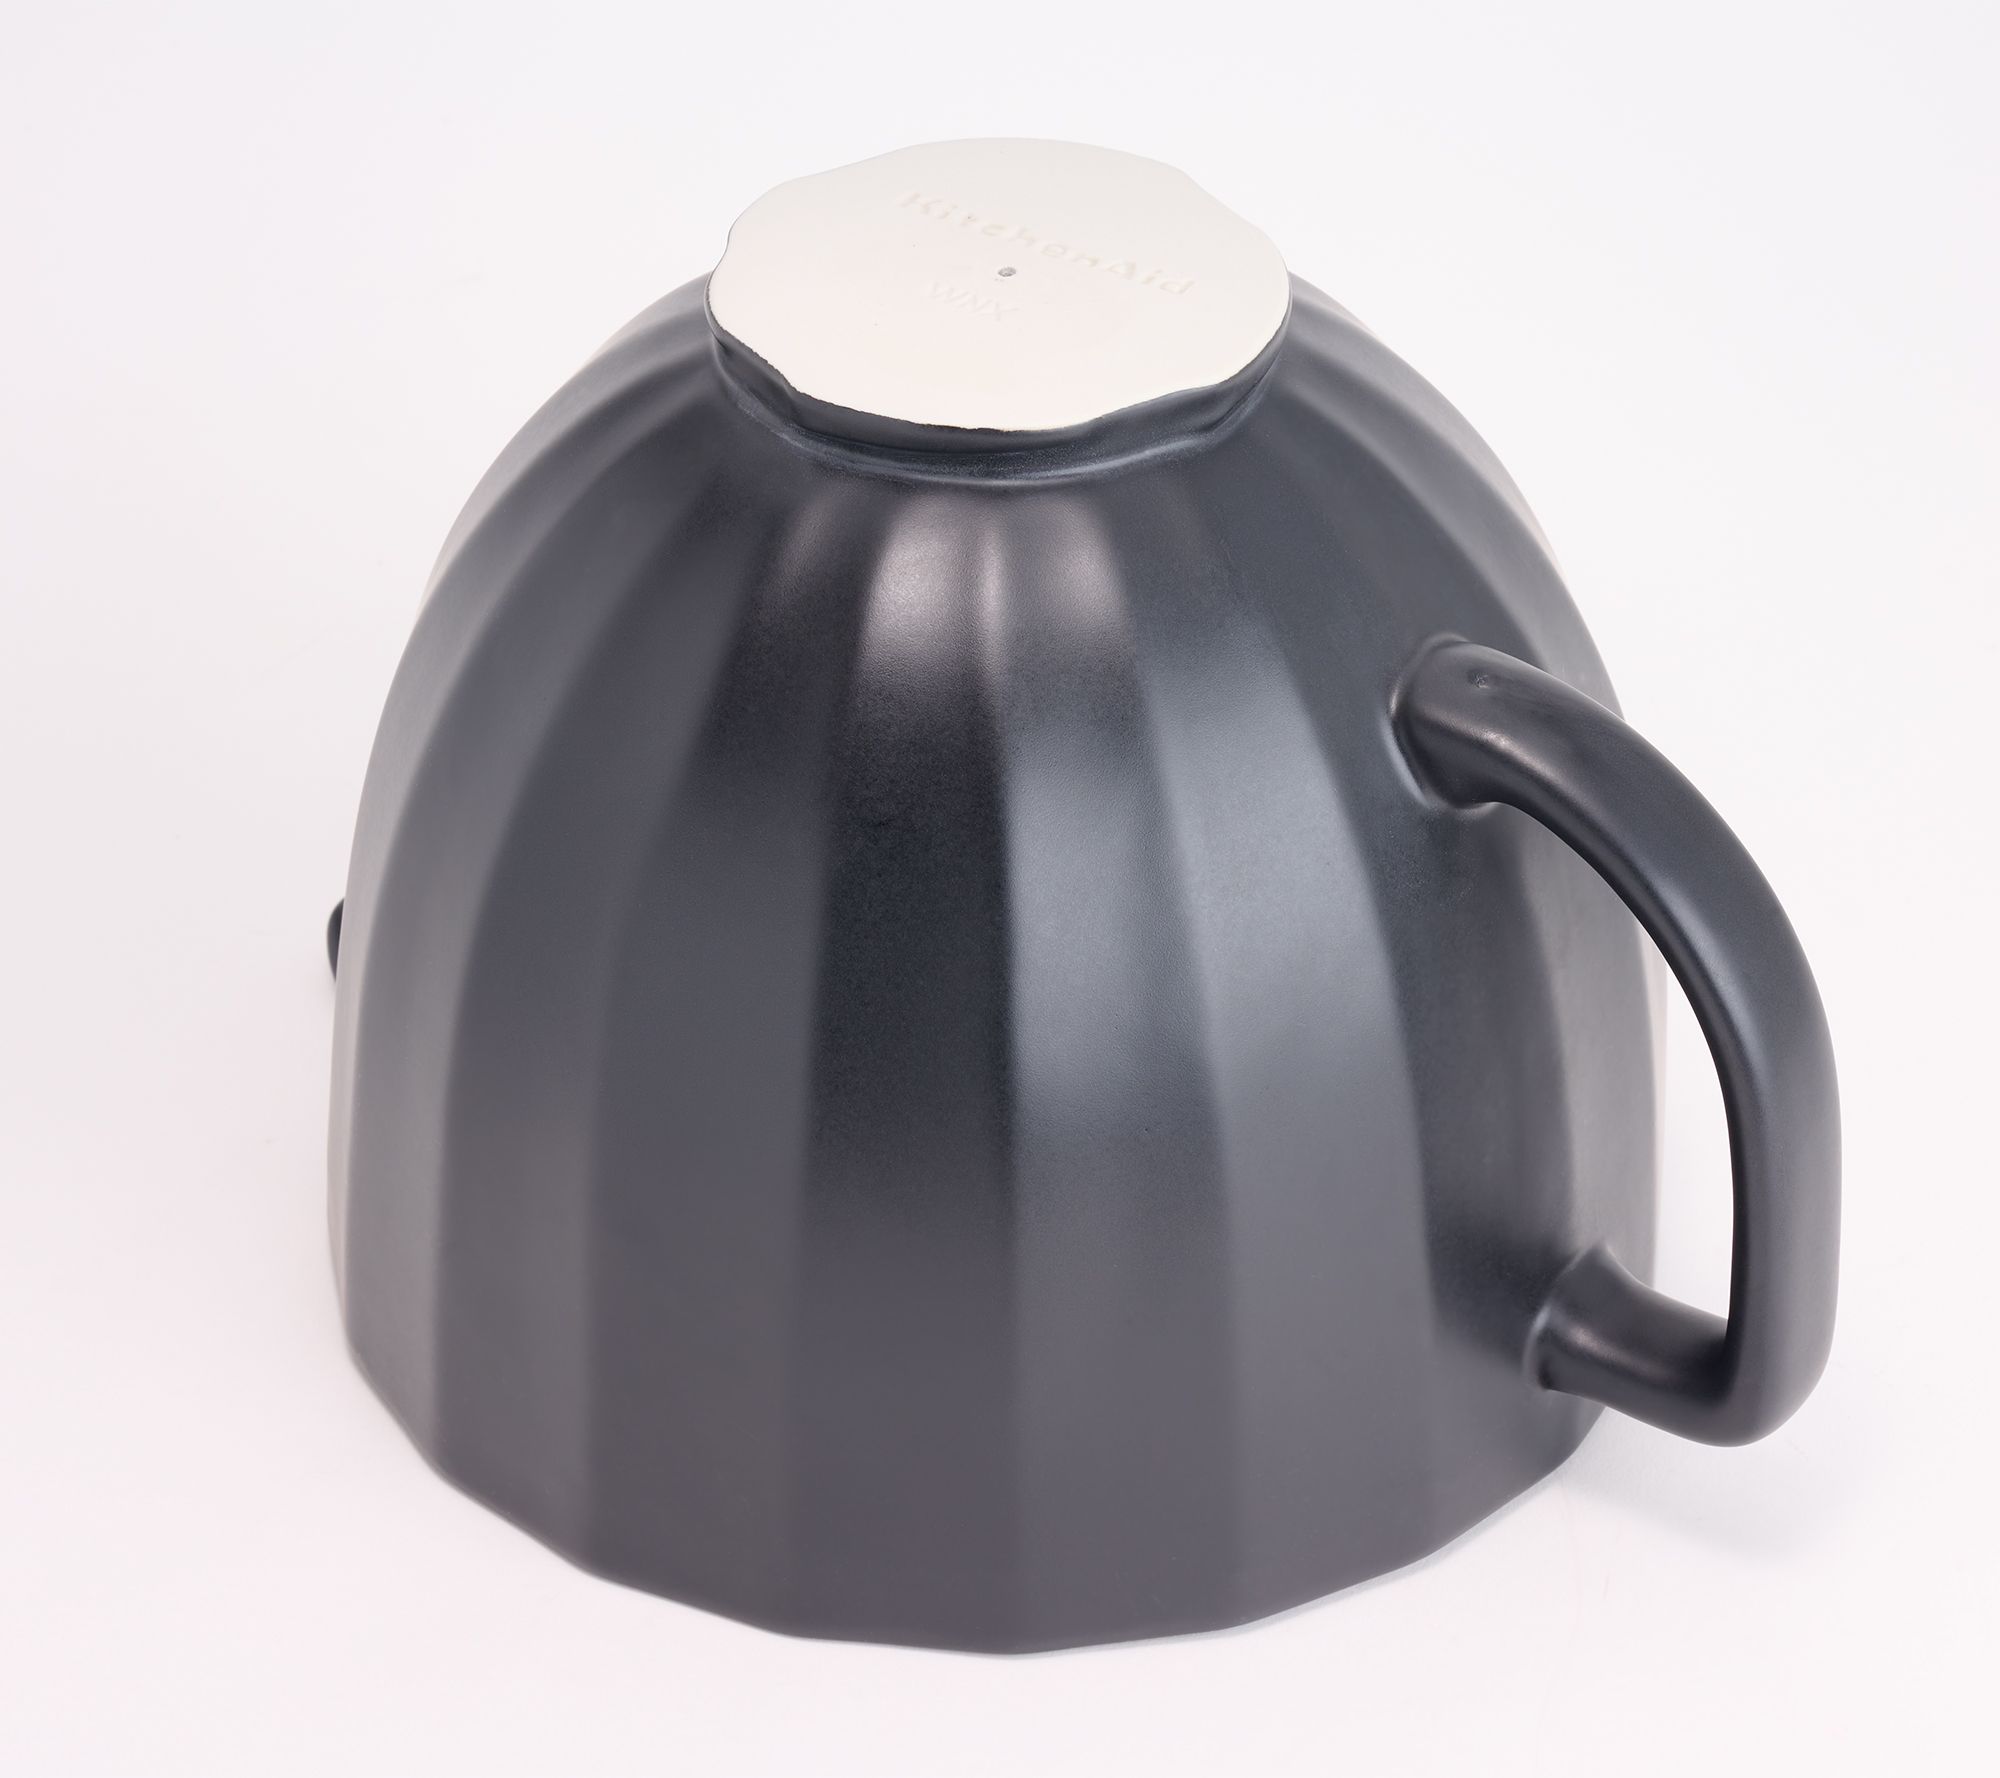 5 Quart Black Shell Ceramic Bowl